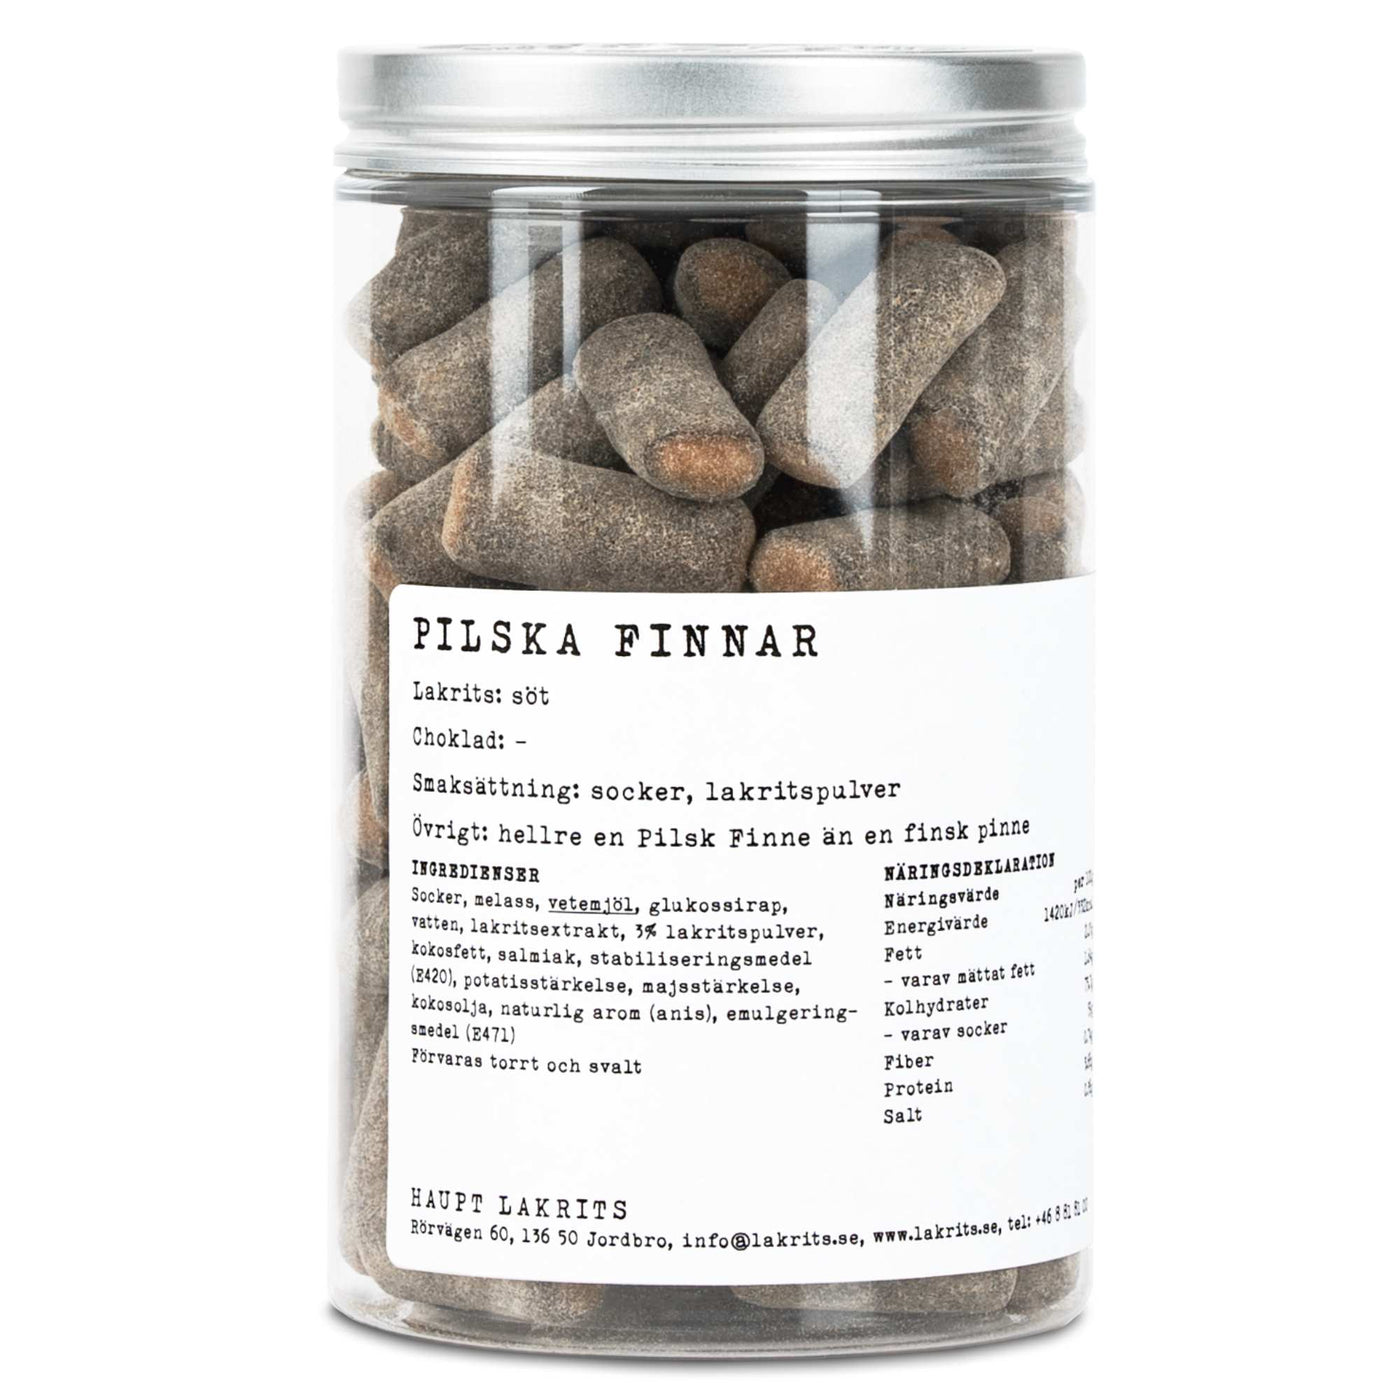 Pilska Finnar - Sugar Coated Liquorice Fondant Rolled In Liquorice Powder